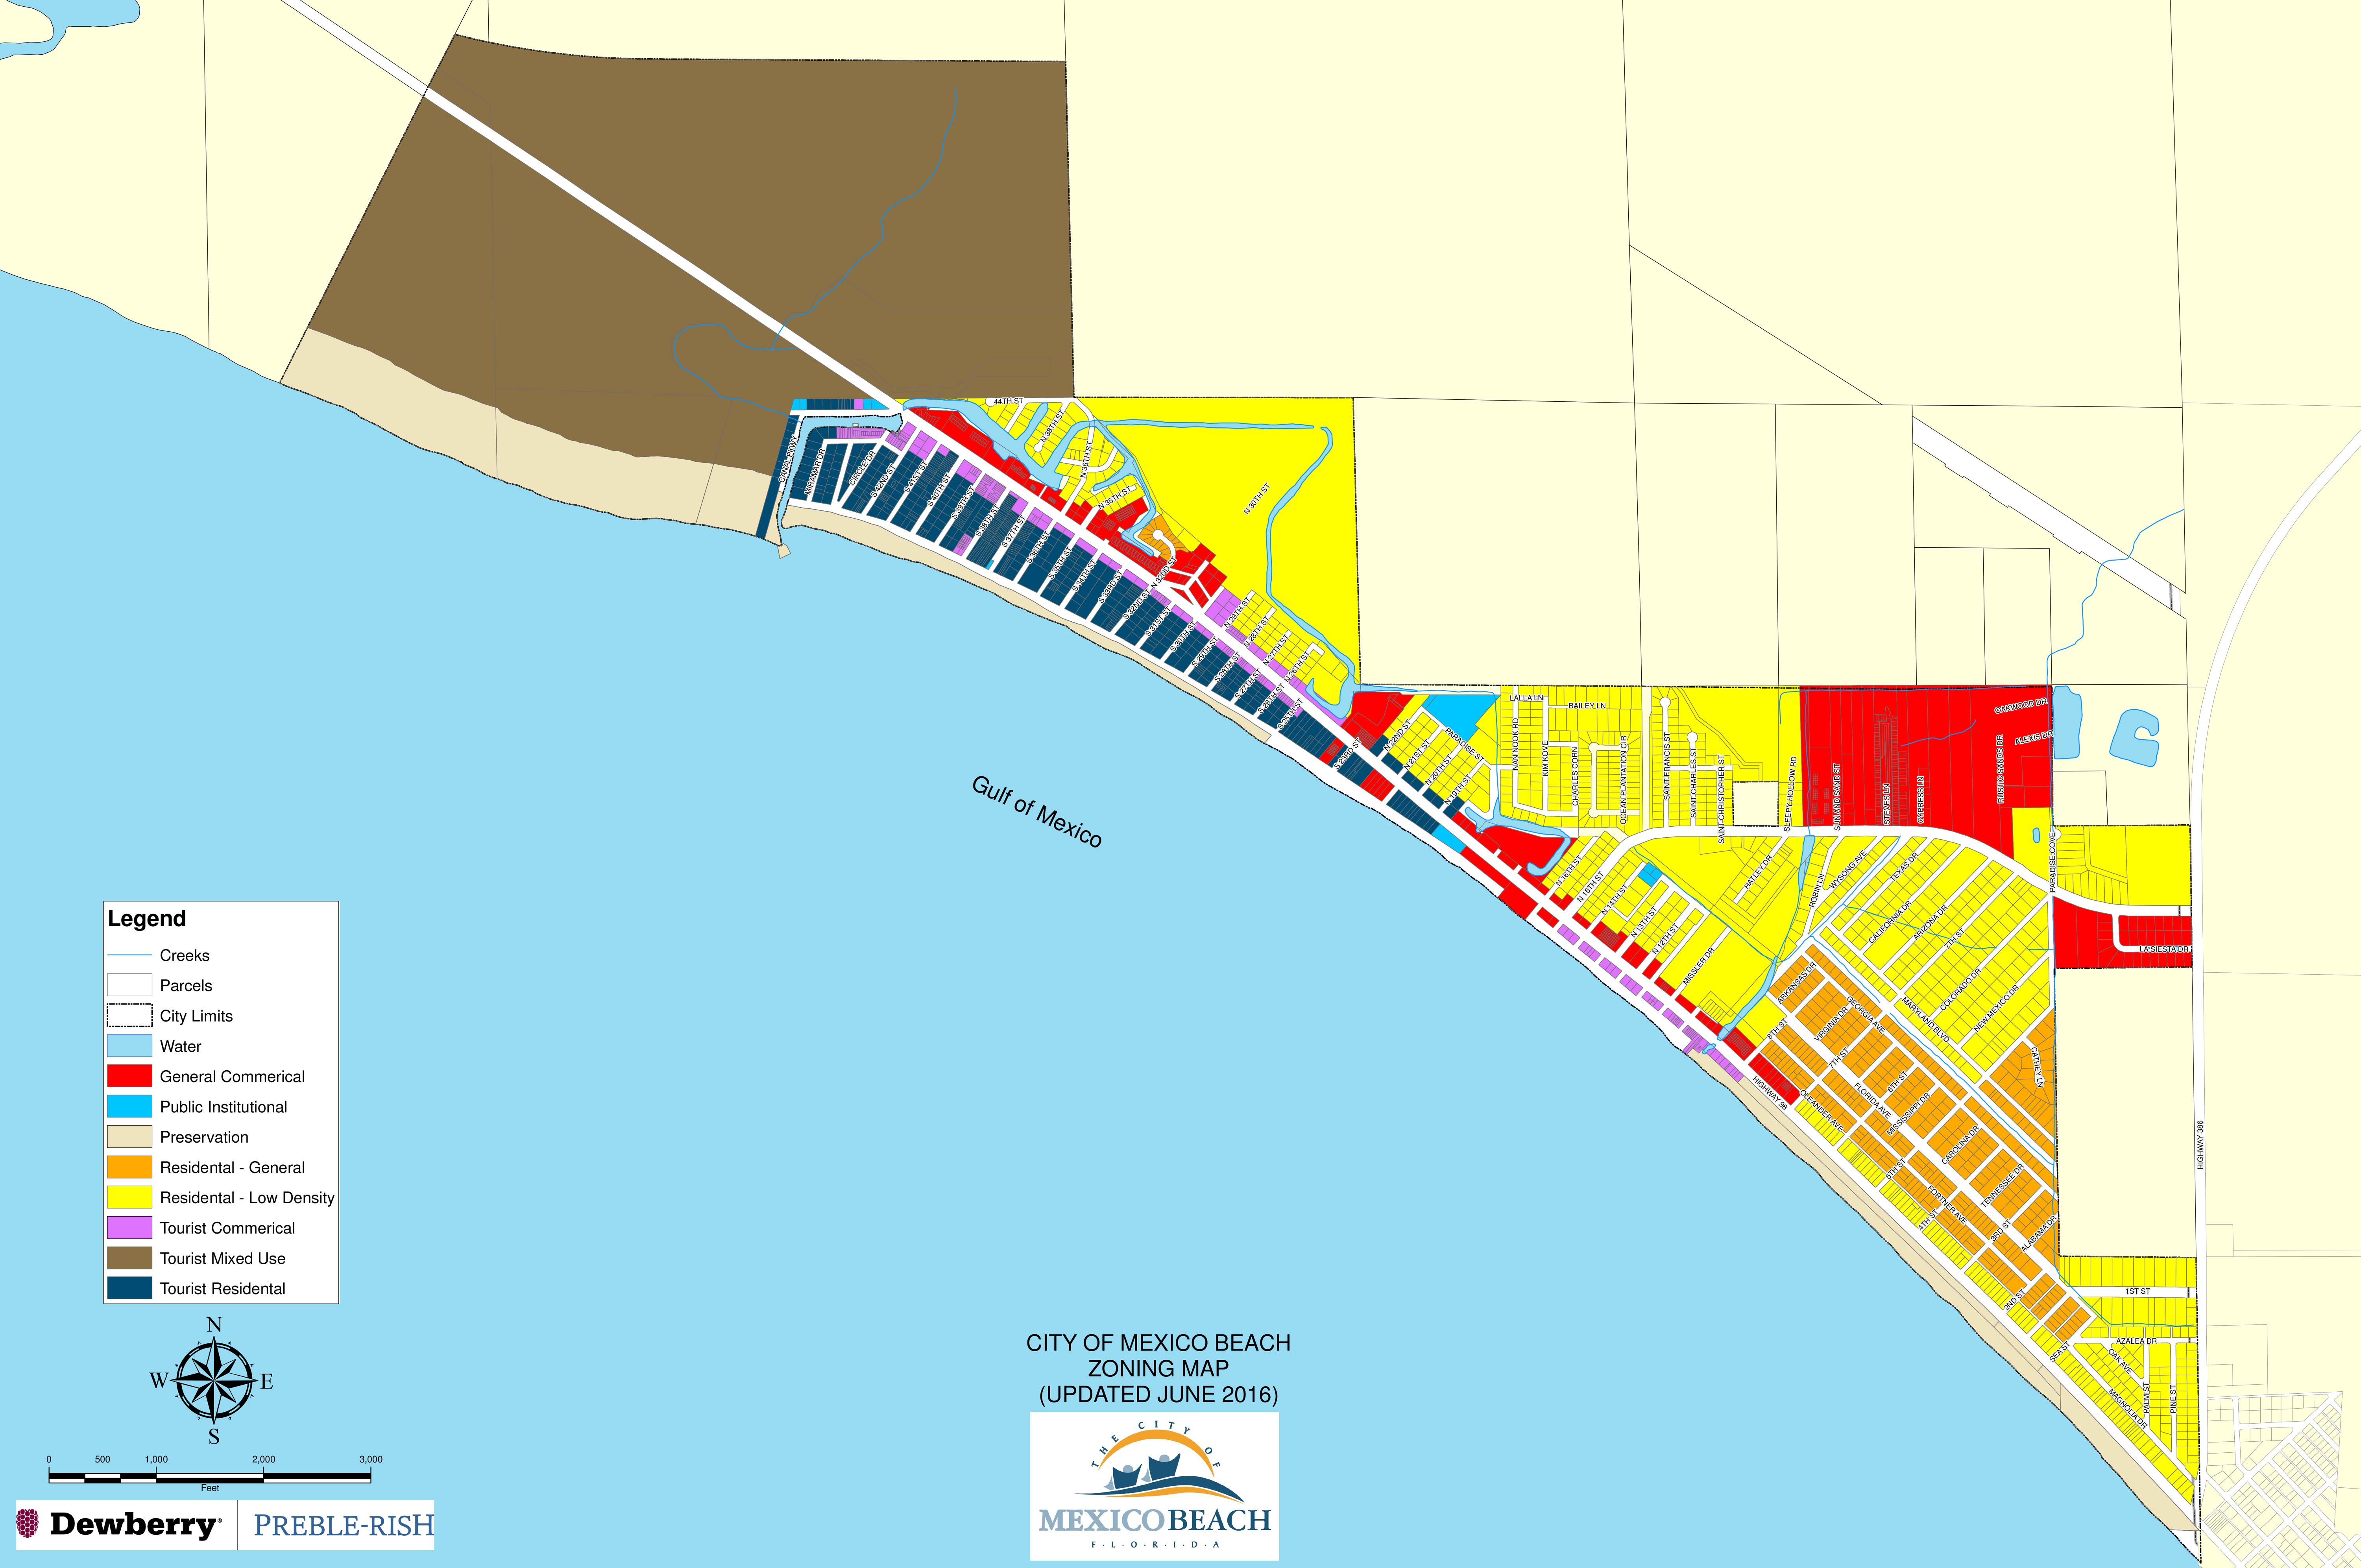 panama city beach city limits map City Of Mexico Beach Zoning Map 98 Real Estate Group panama city beach city limits map